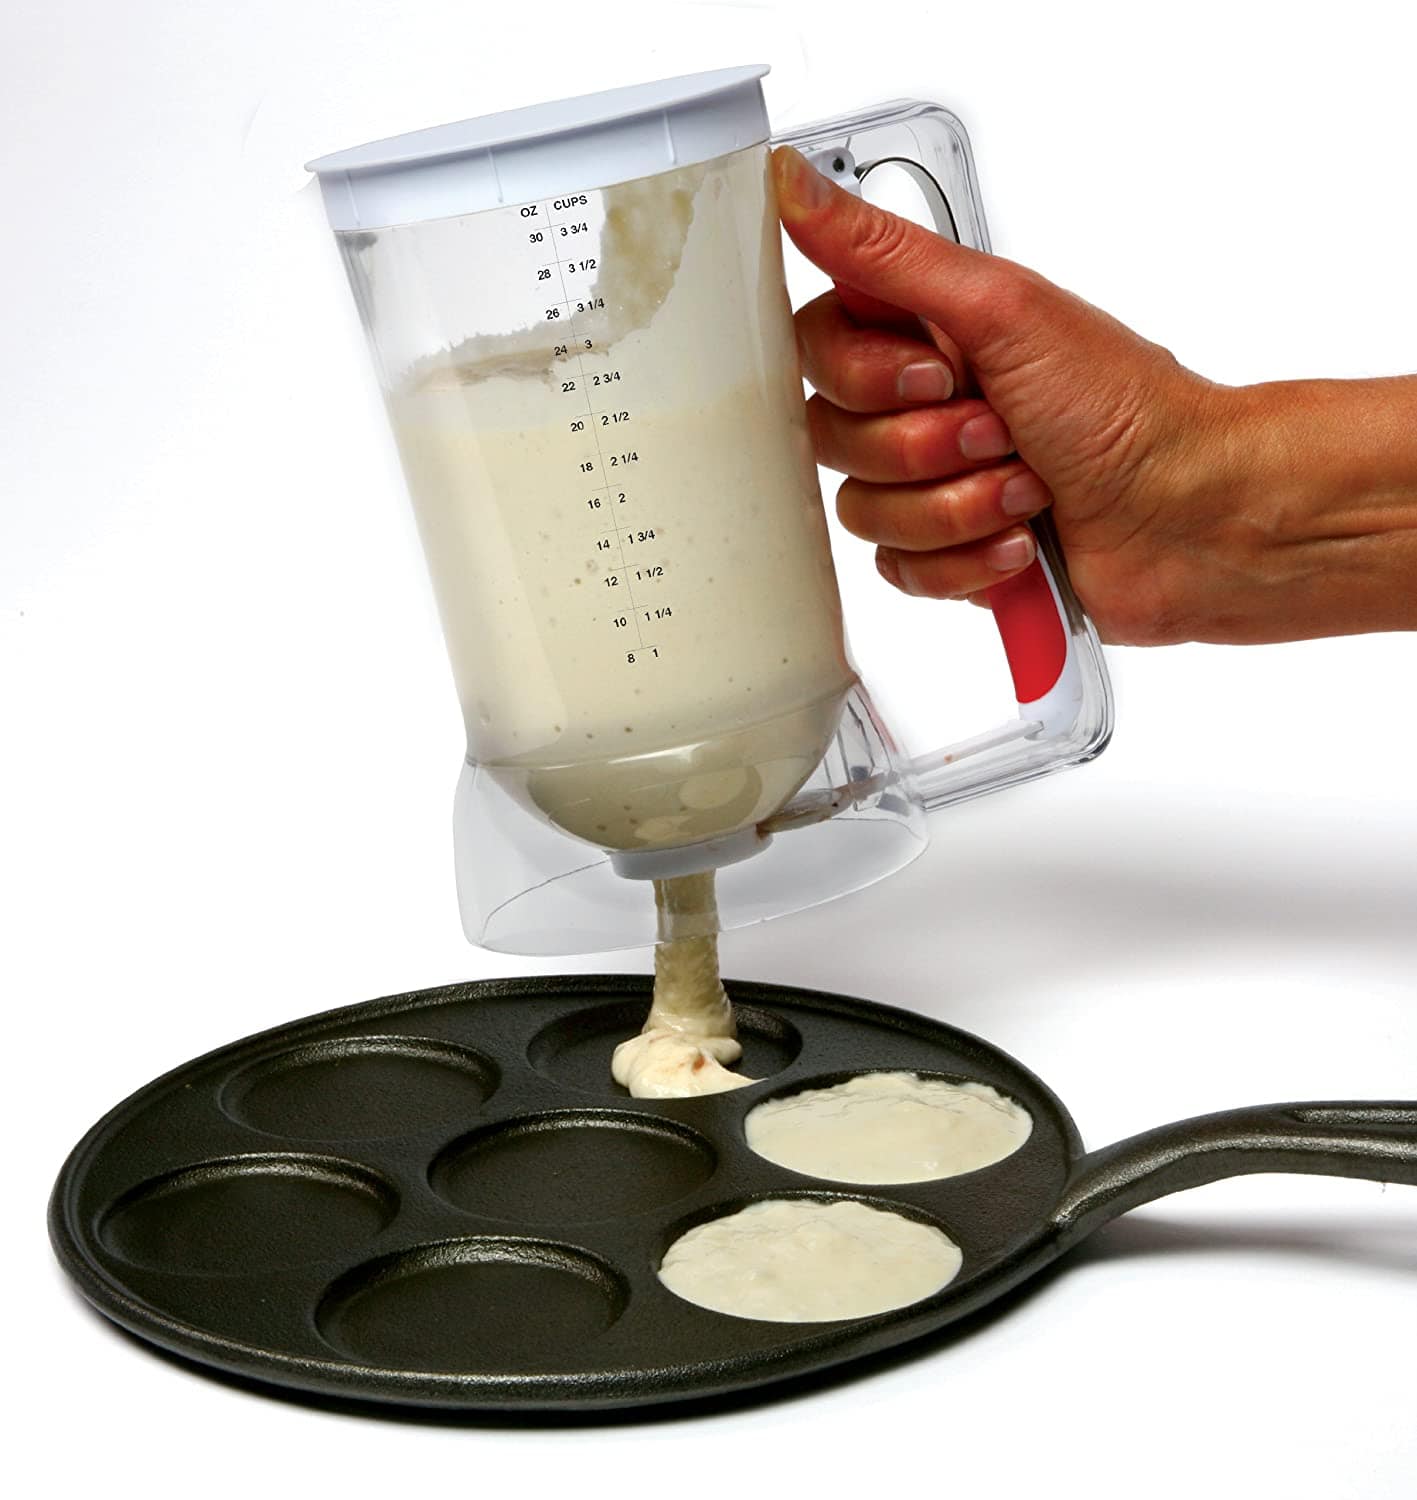 Top 5 - Best Pancake Batter Dispensers of 2022 